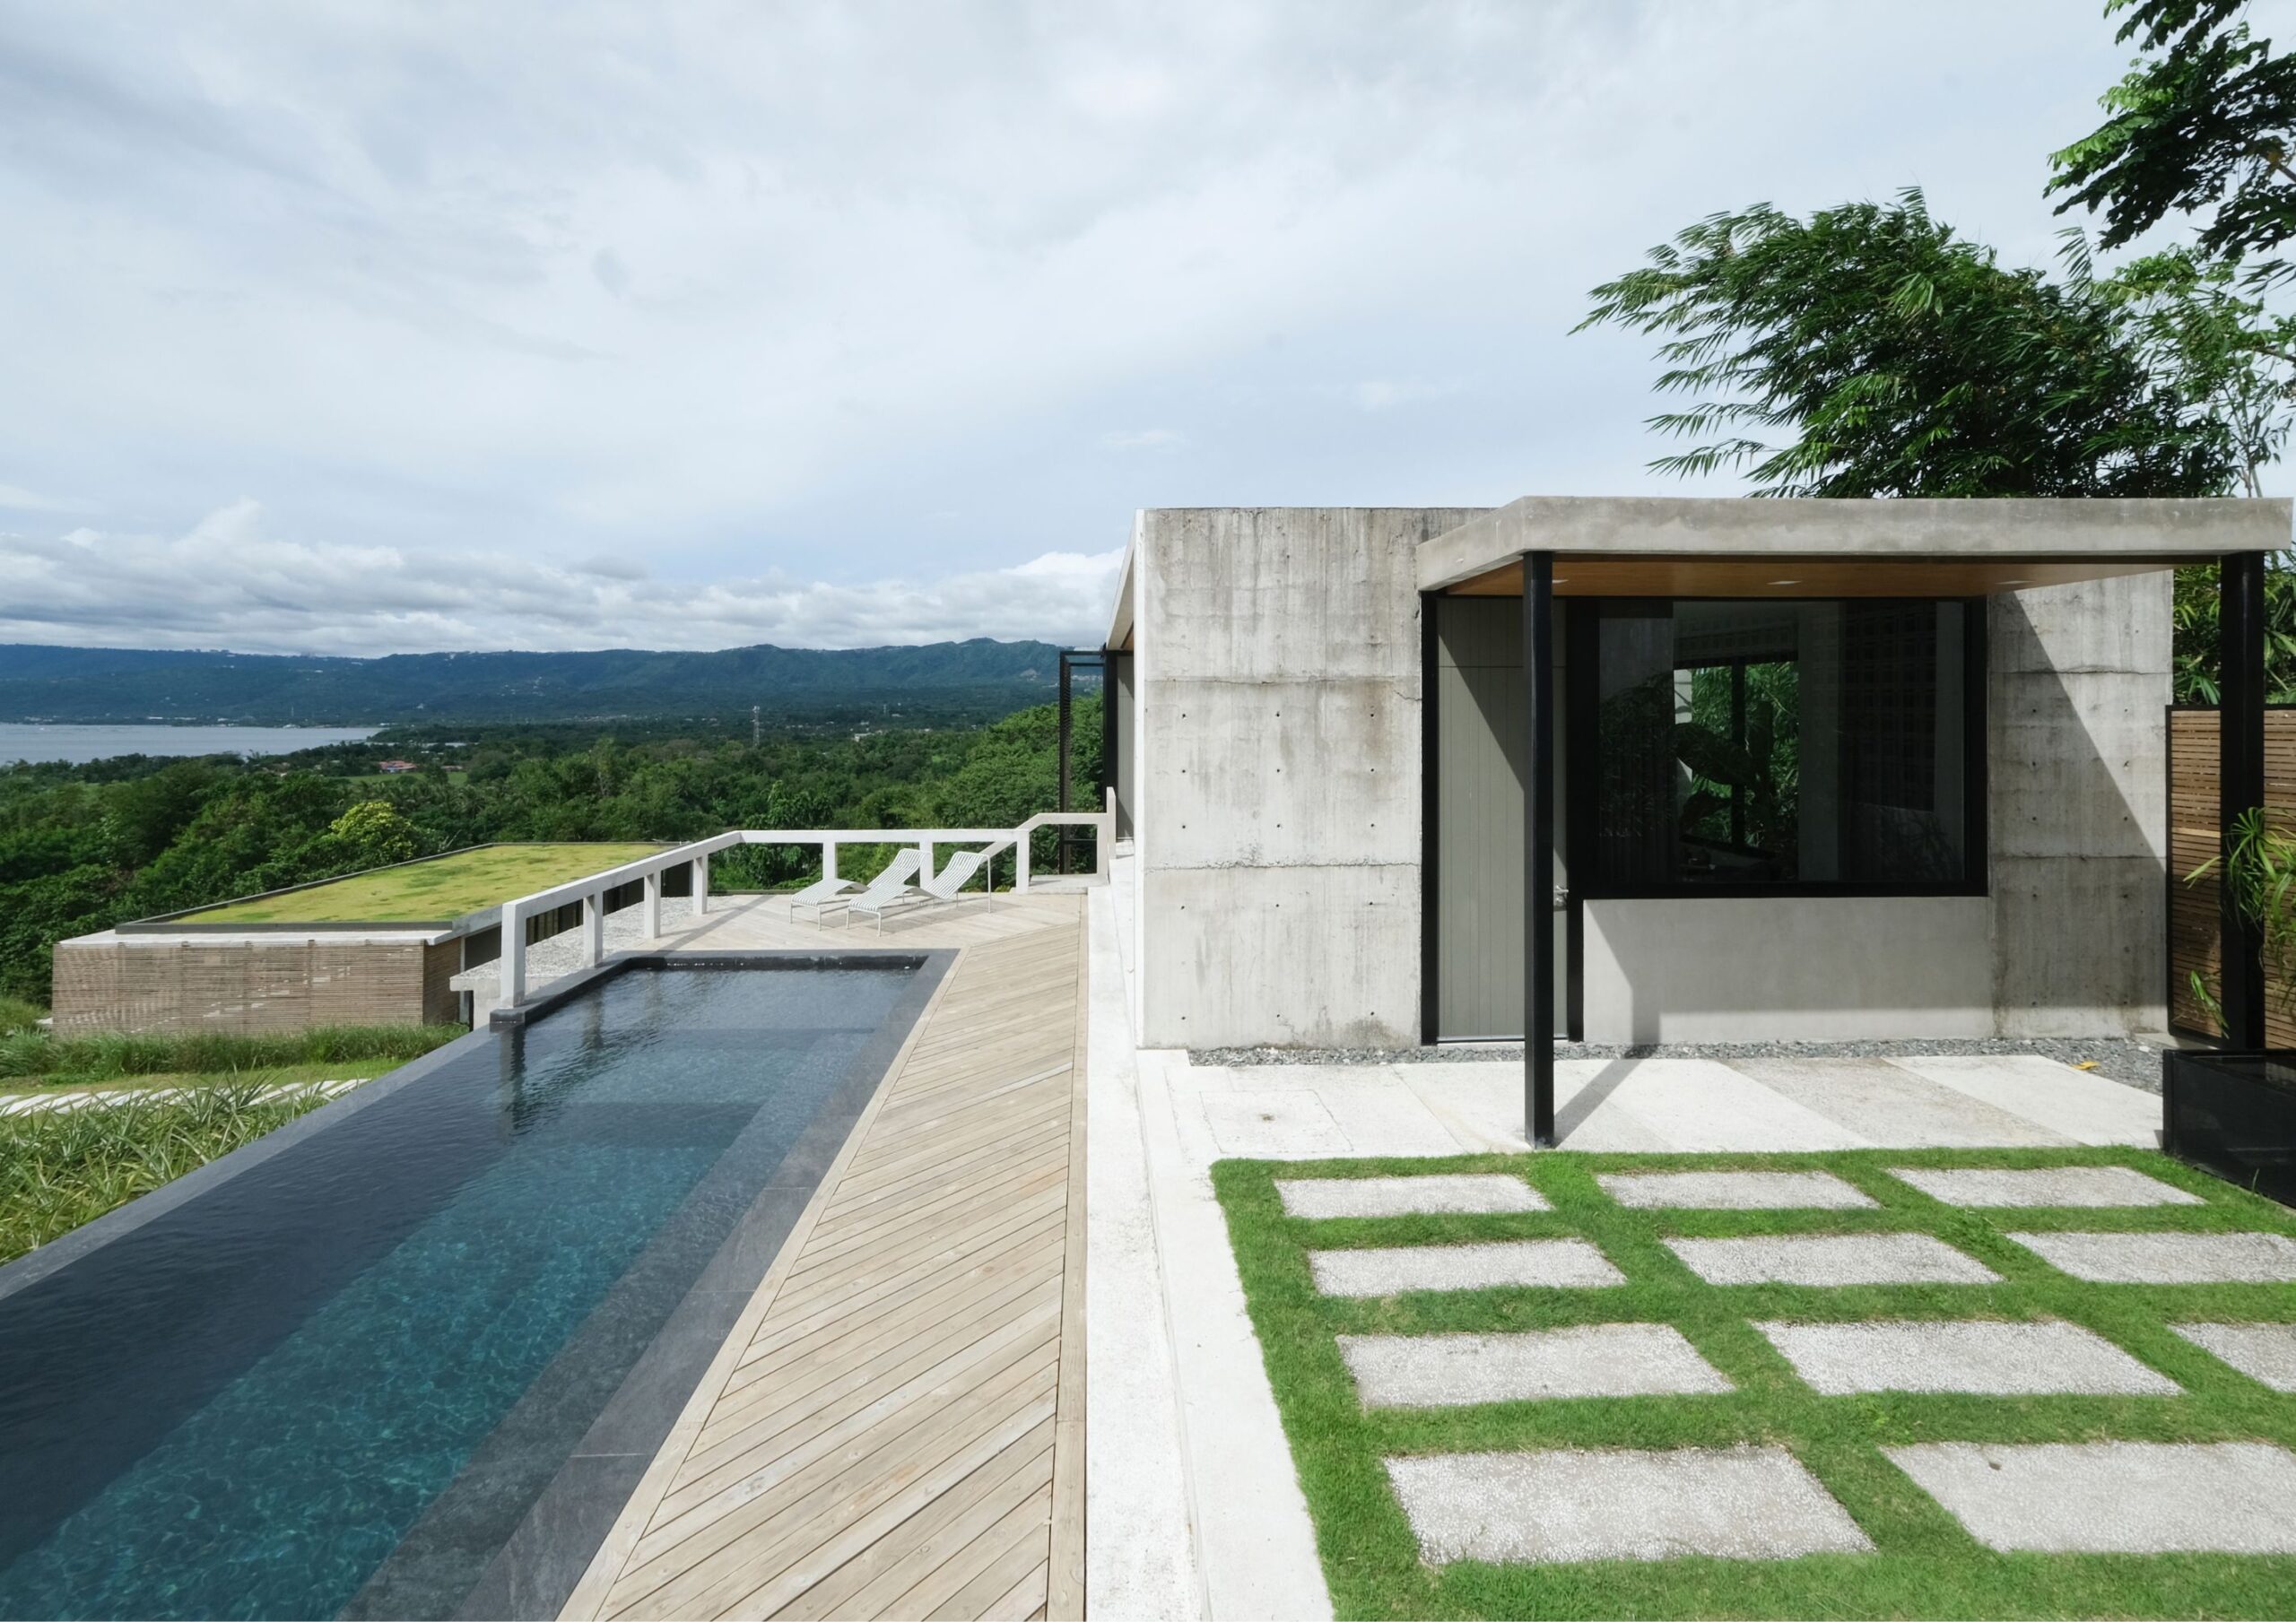 A lap pool overlooking a lake view in Tanauan, Batangas.